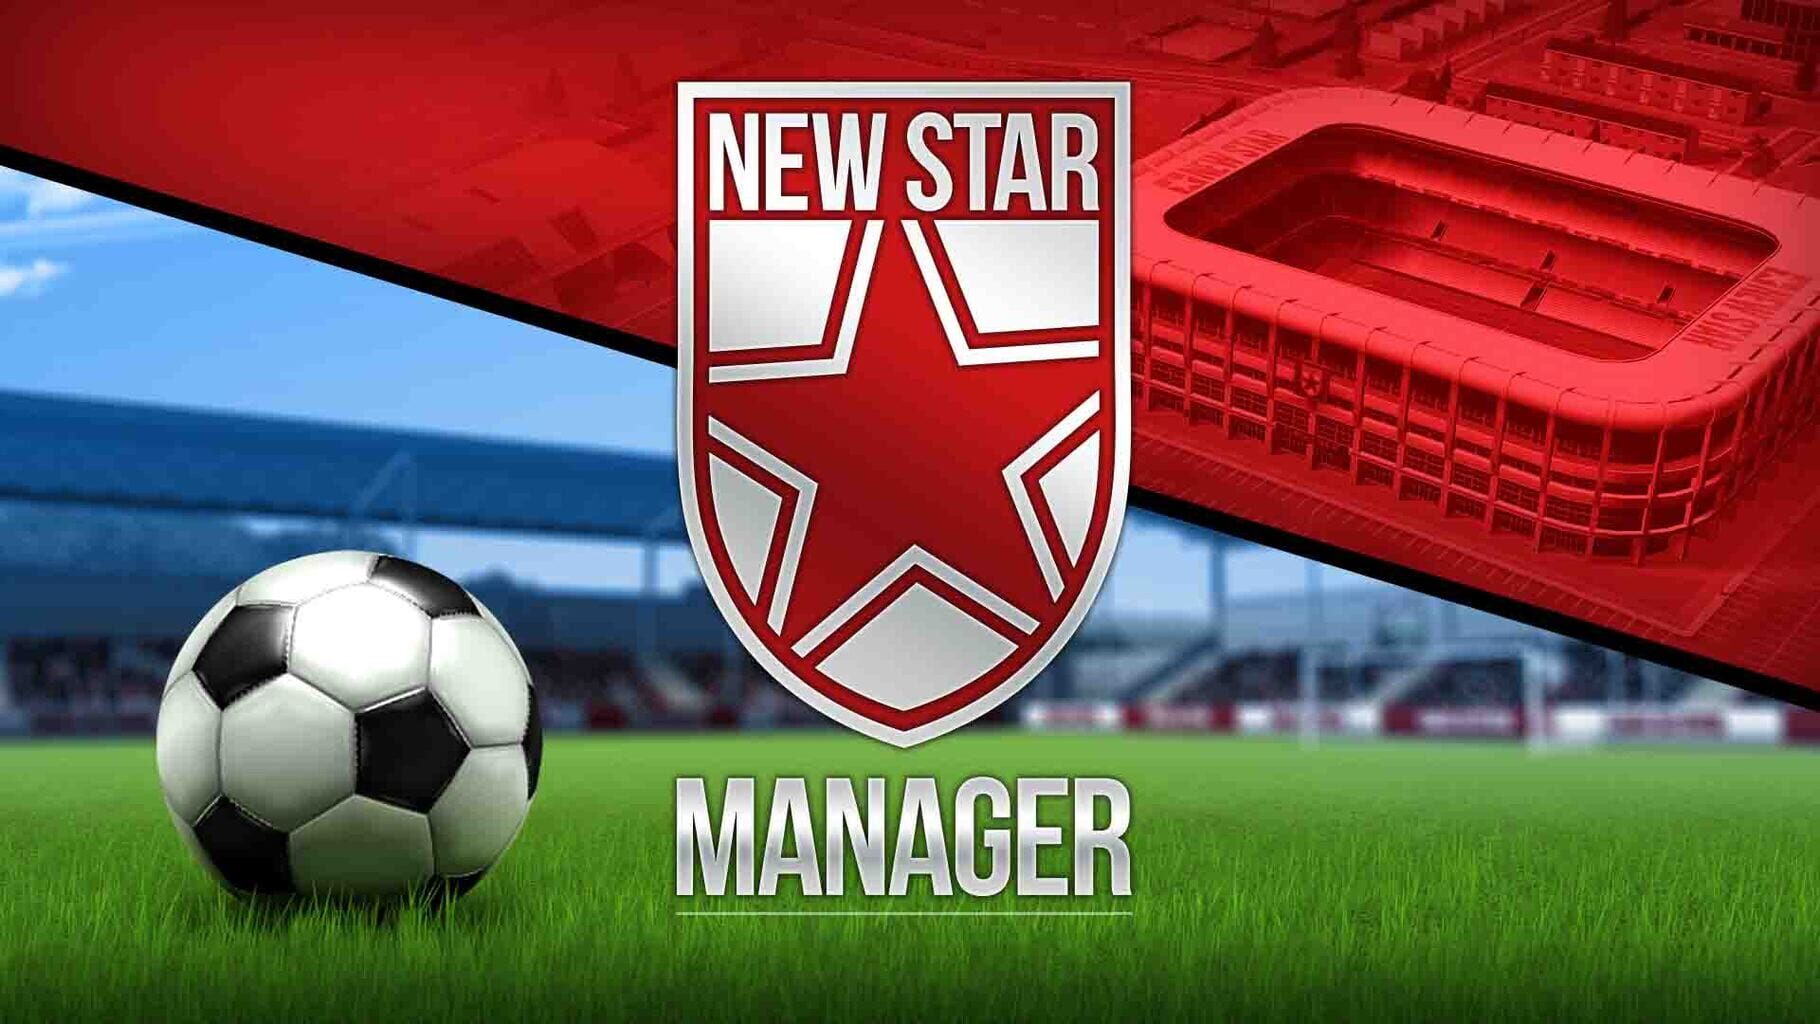 New Star Manager artwork